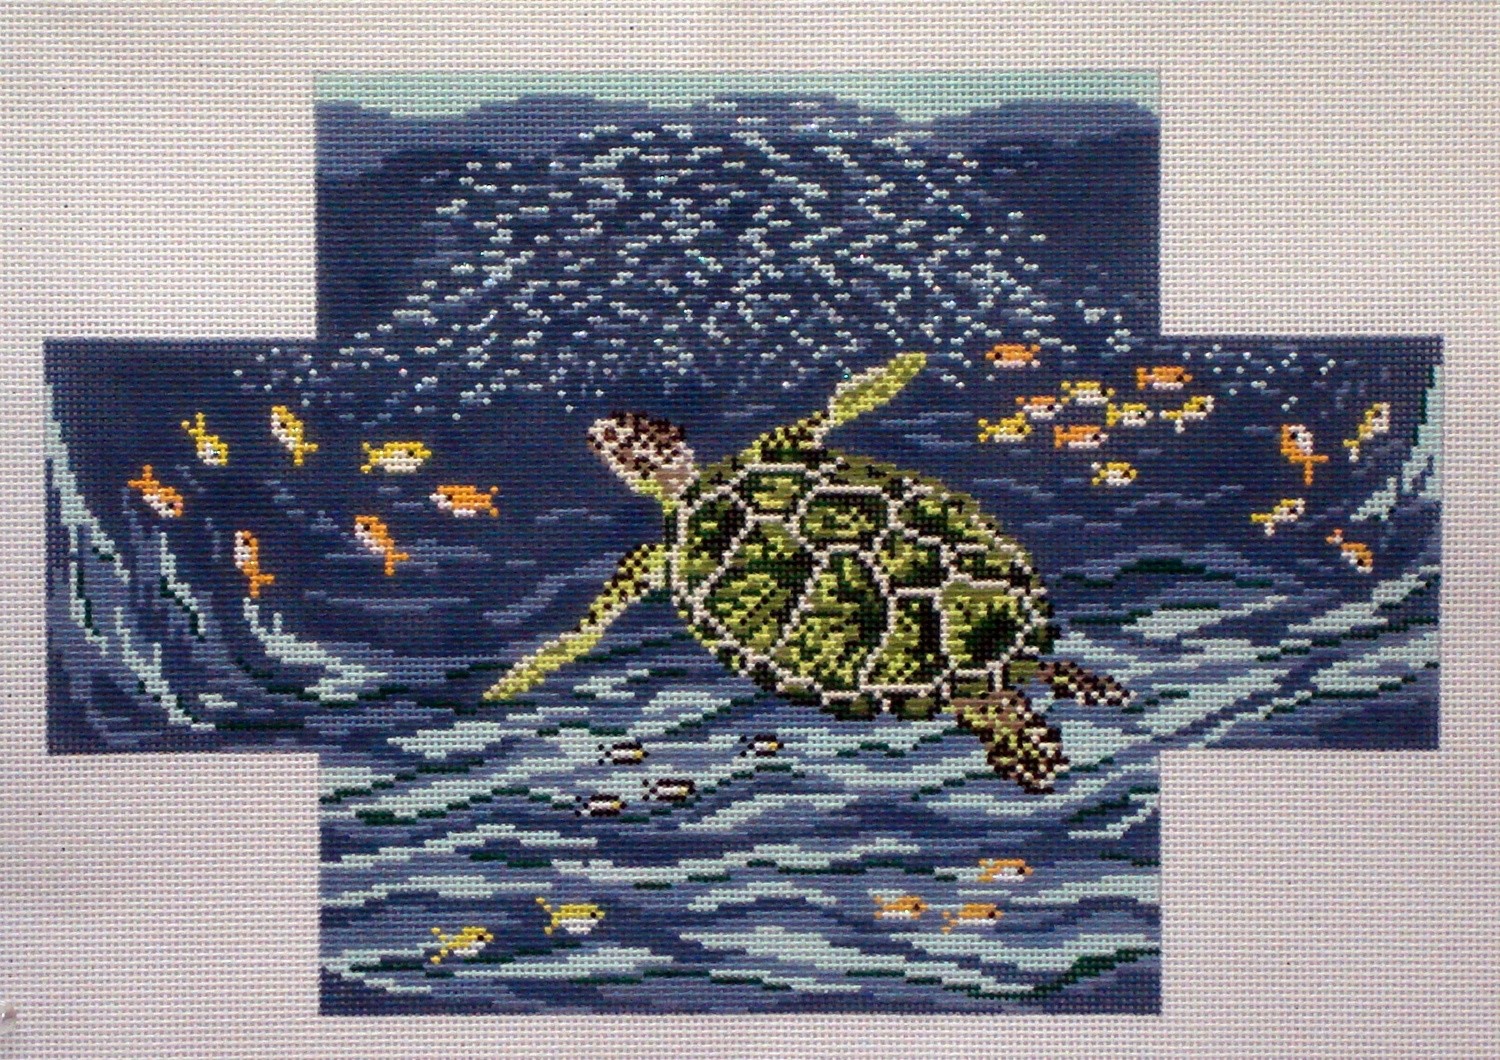 Sea Turtle Brick Cover      (handpainted by Needle Crossing)